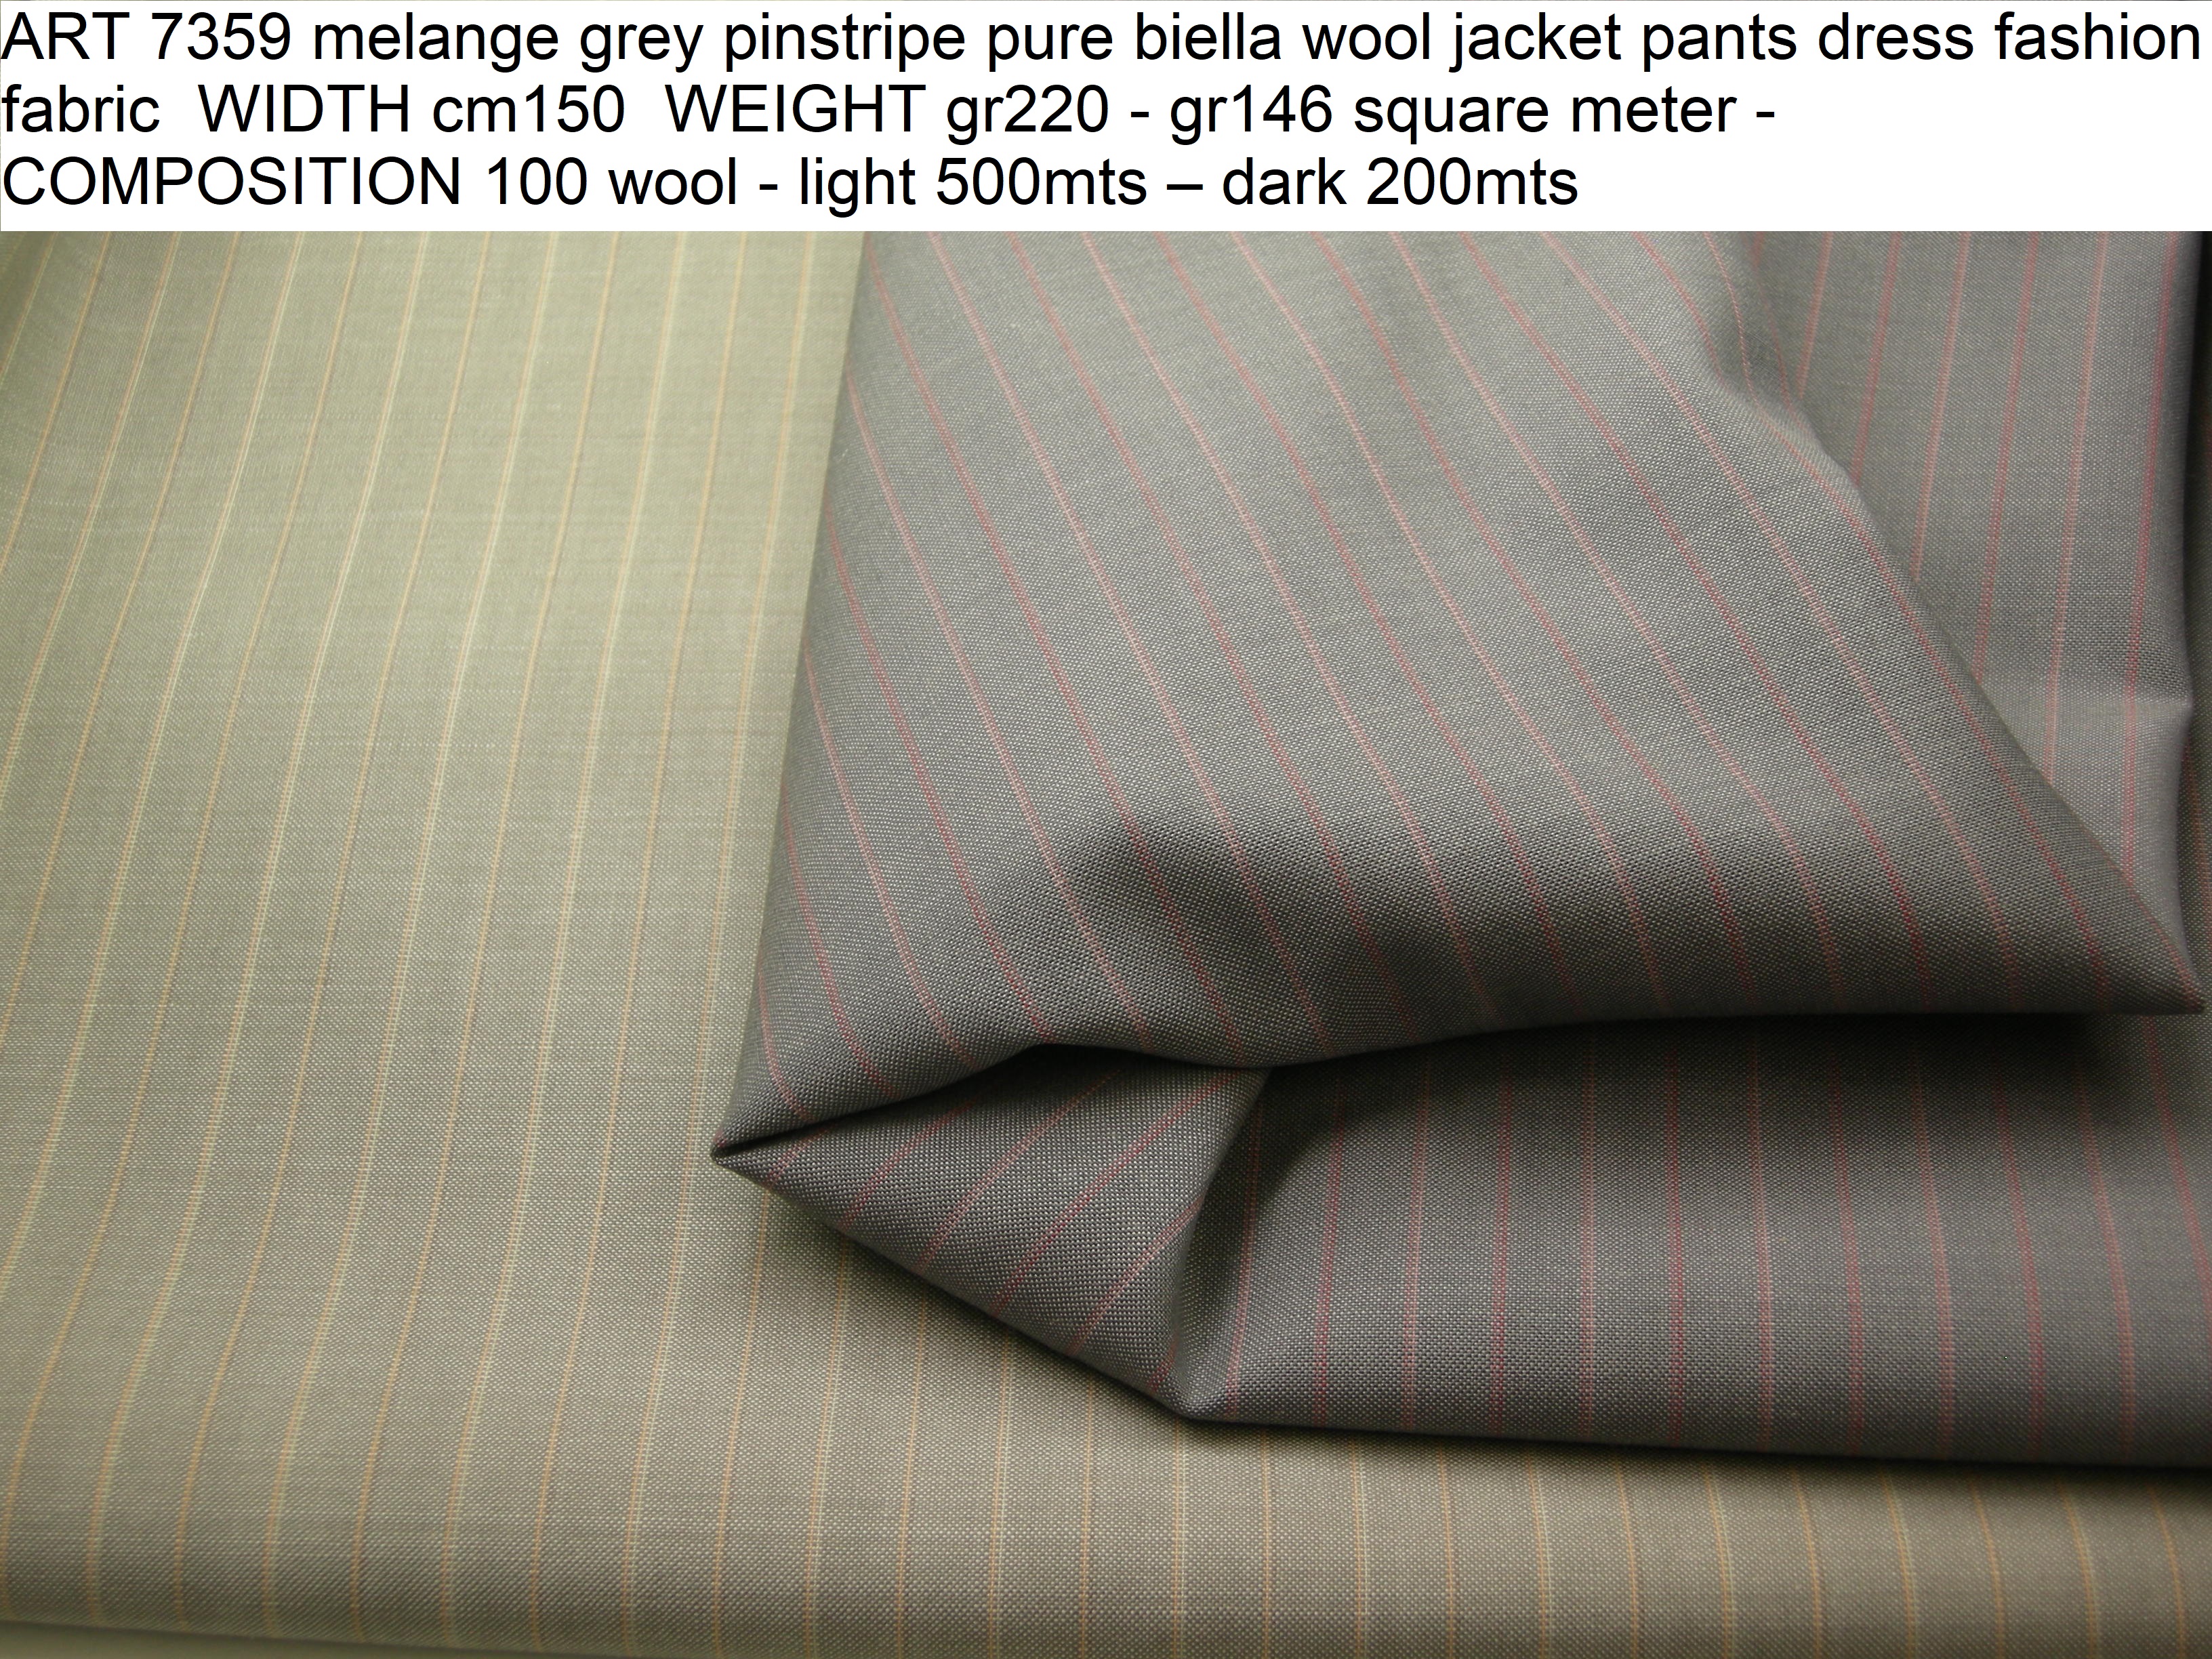 ART 7359 melange grey pinstripe pure biella wool jacket pants dress fashion fabric WIDTH cm150 WEIGHT gr220 - gr146 square meter - COMPOSITION 100 wool - light 500mts – dark 200mts